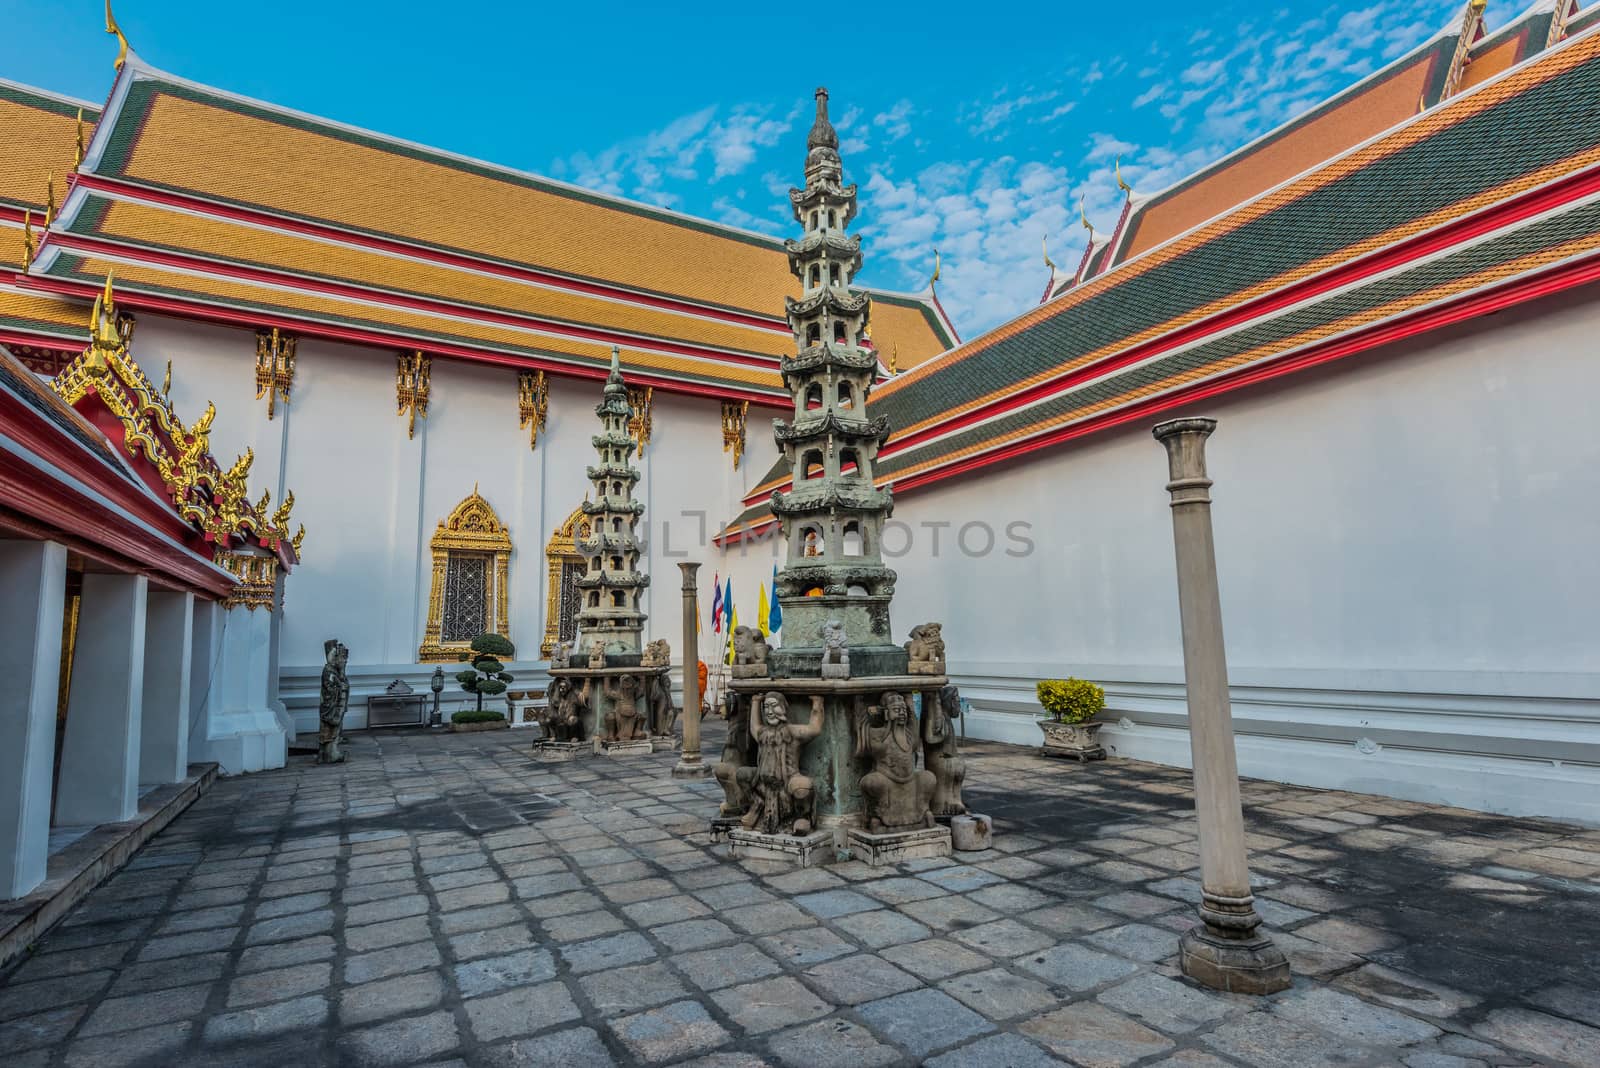 temple interior details Wat Pho temple bangkok thailand